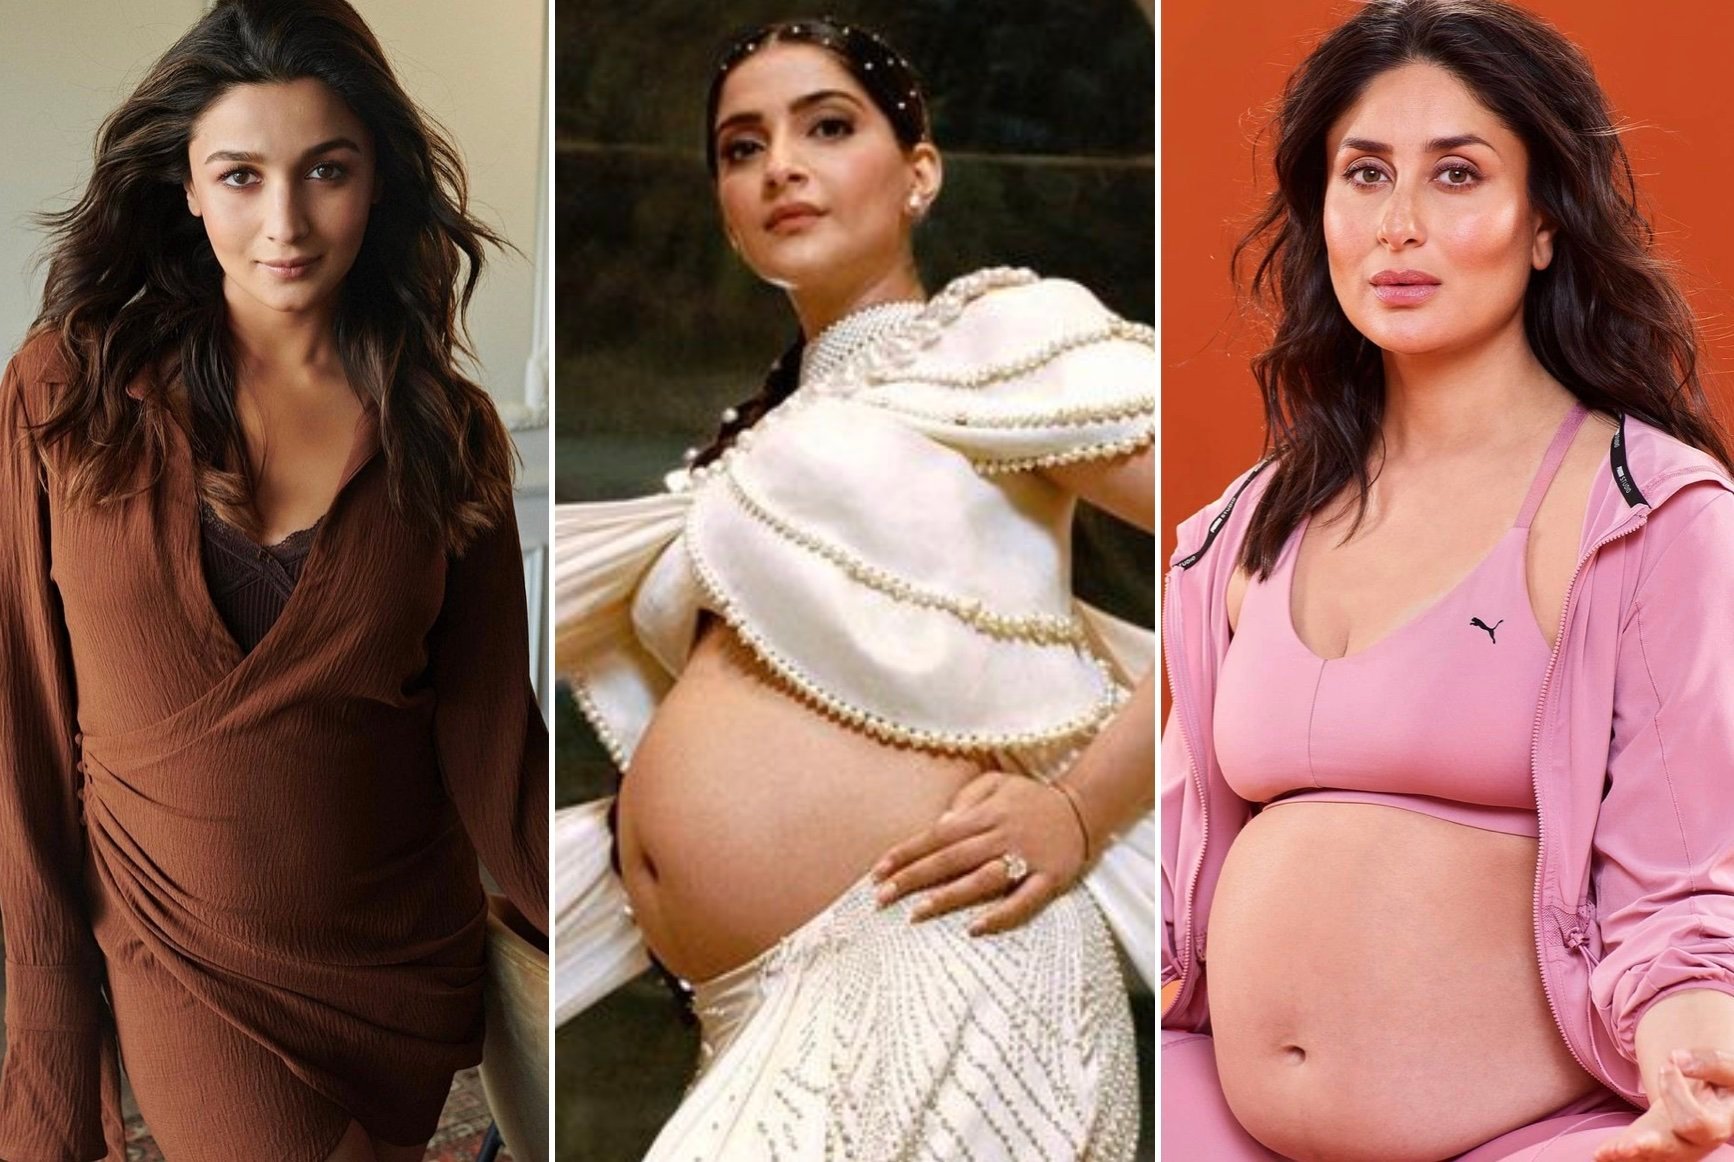 Bollywood’s Alia Bhatt, Sonam Kapoor and Kareena Kapoor all rocked their pregnancies. Photos: @aliaabhatt, @sonamkapoor, @kareenakapoorkhan/Instagram